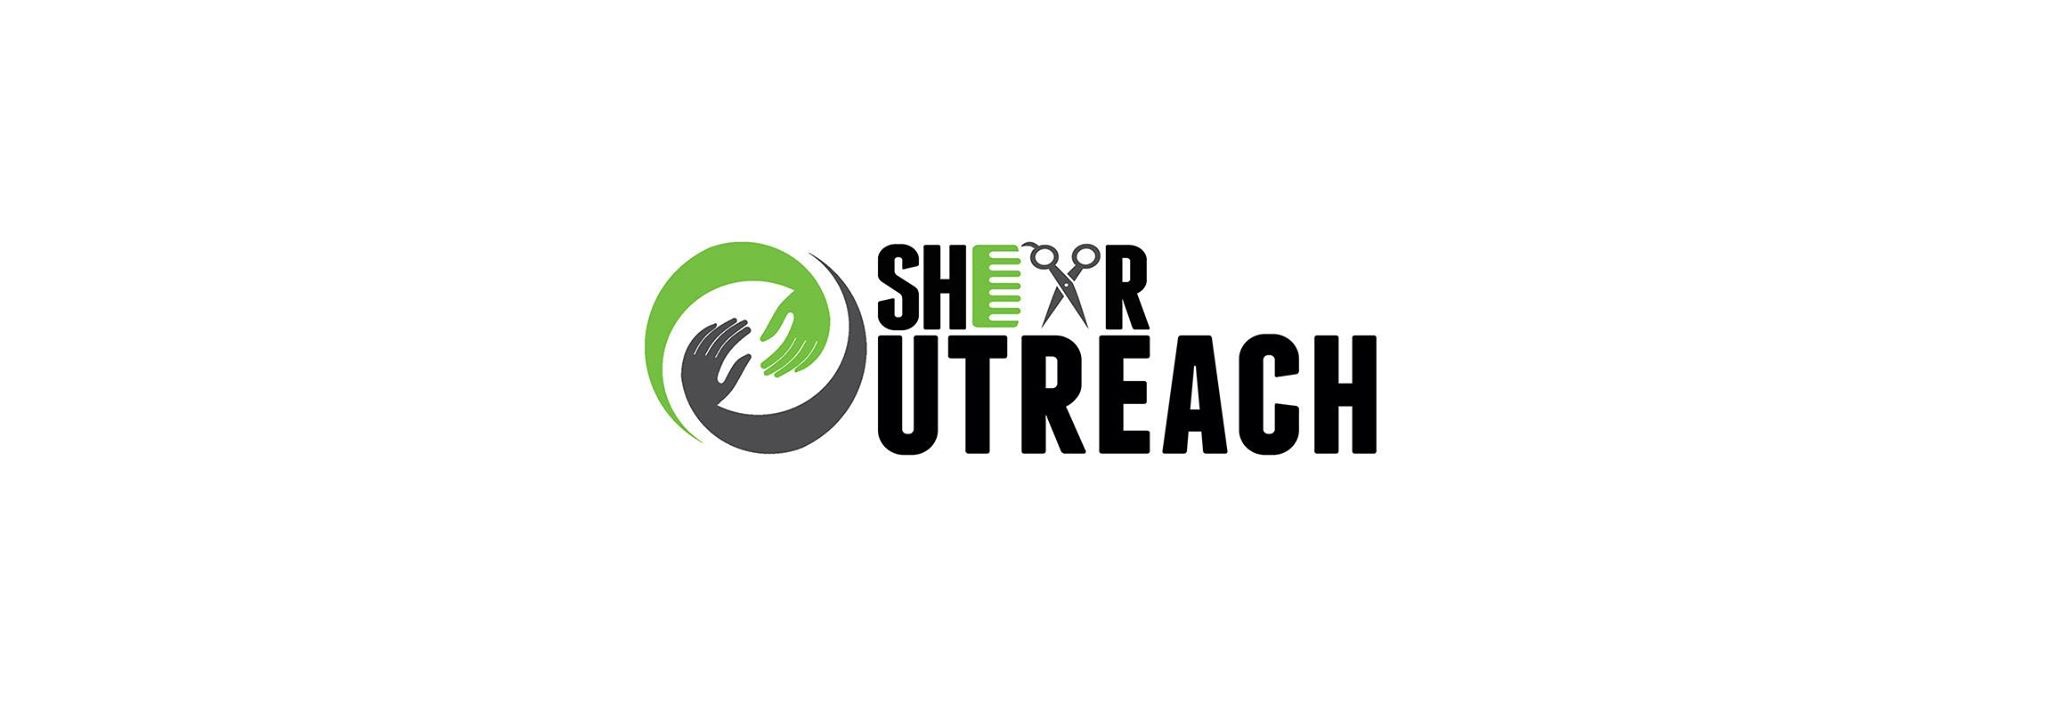 Shear Outreach logo